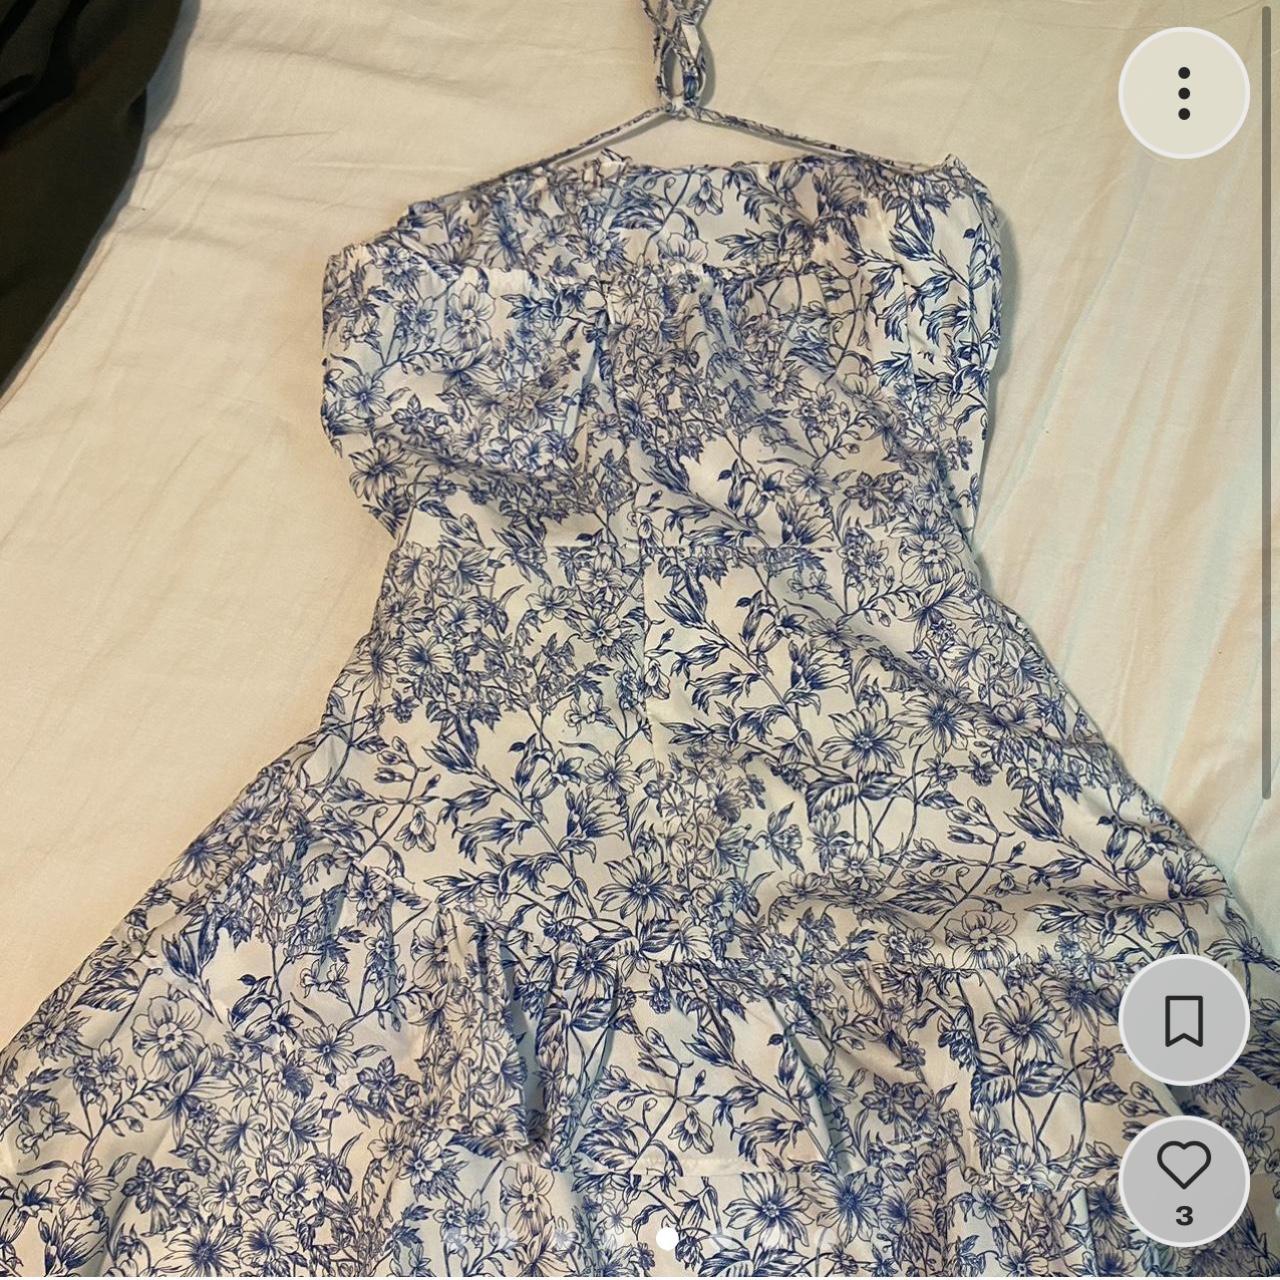 SHEIN blue floral dress - Depop